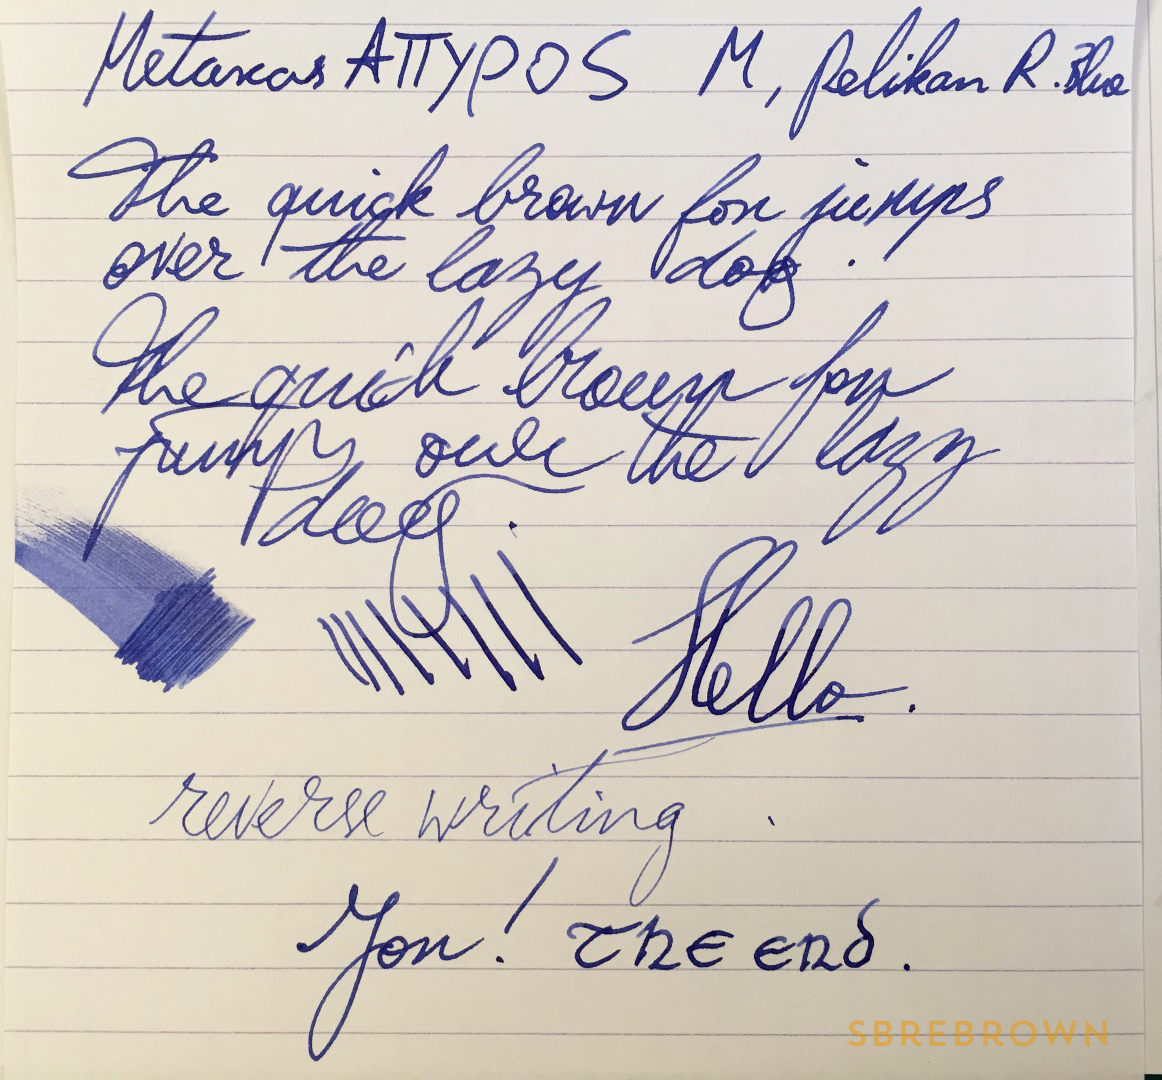 Metaxas Apyros Infinity Fountain Pen Review